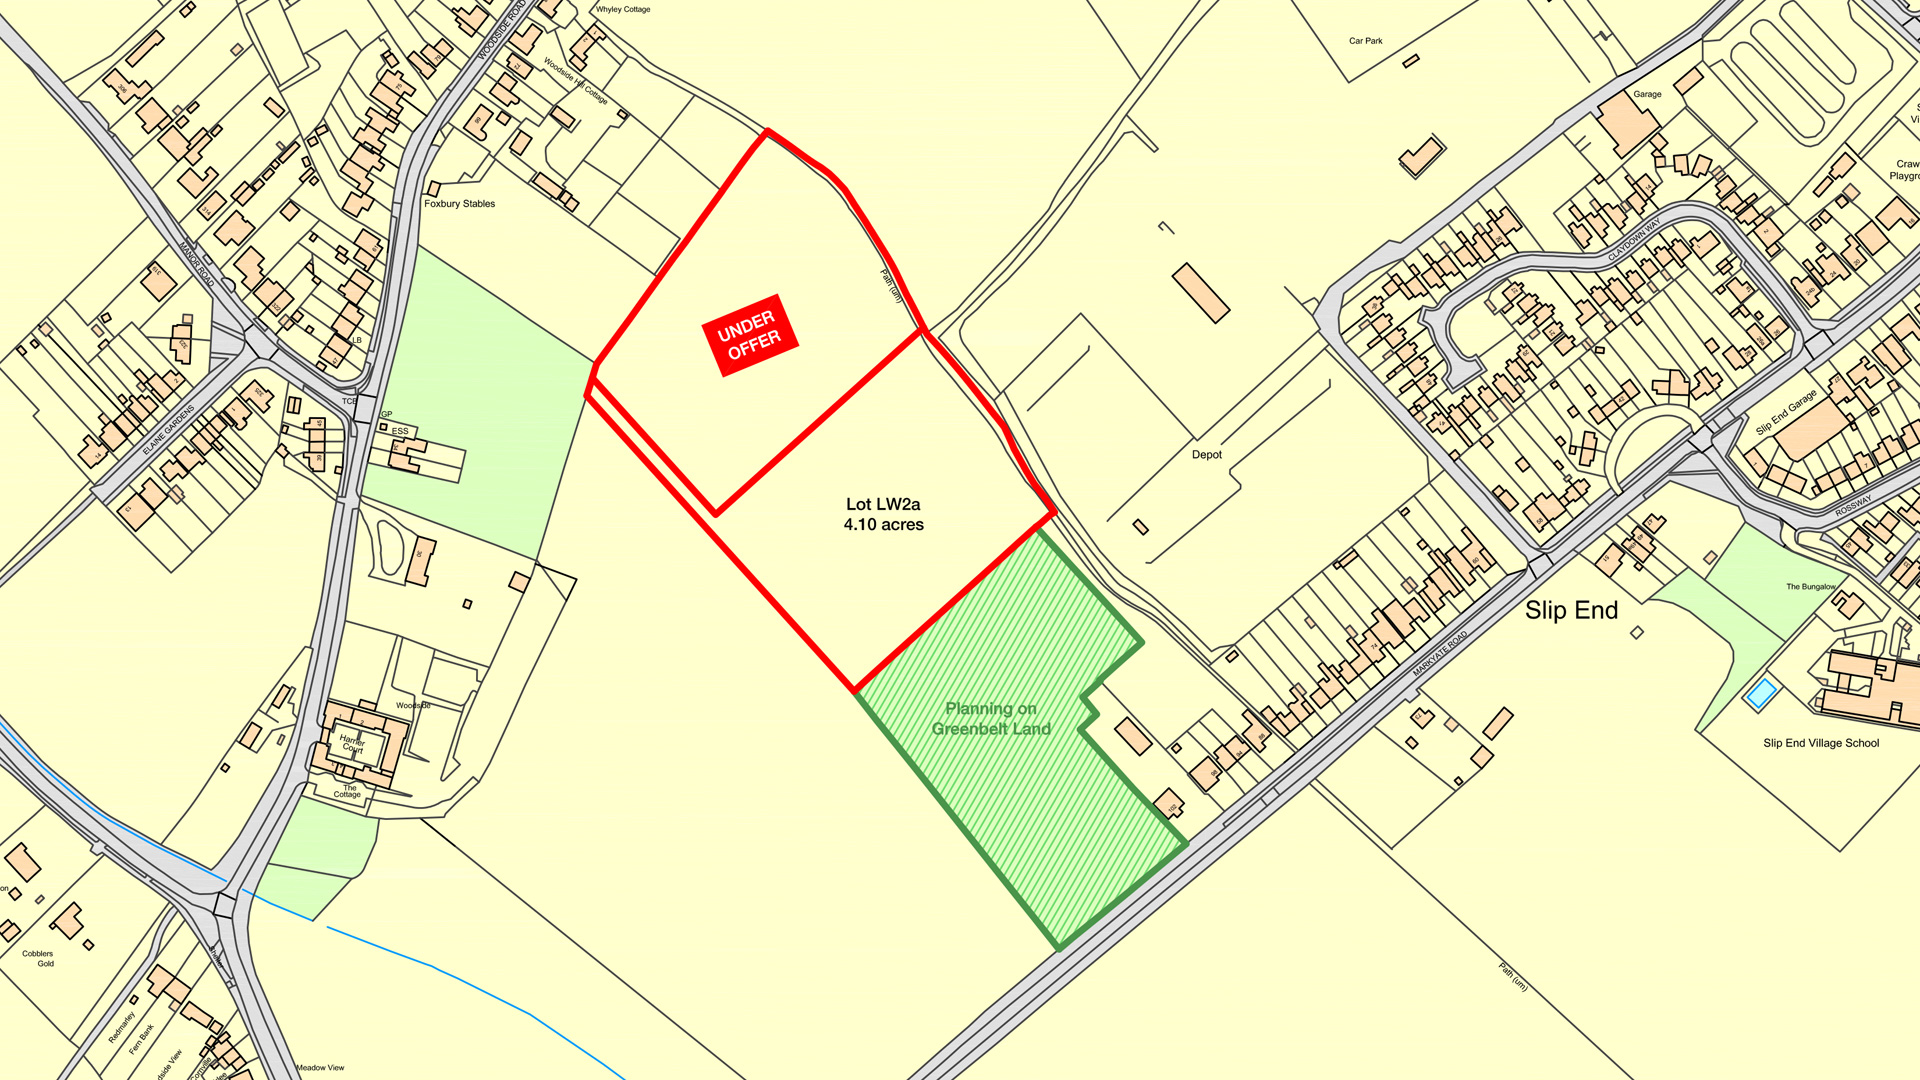 Land for sale near Slip End site plan